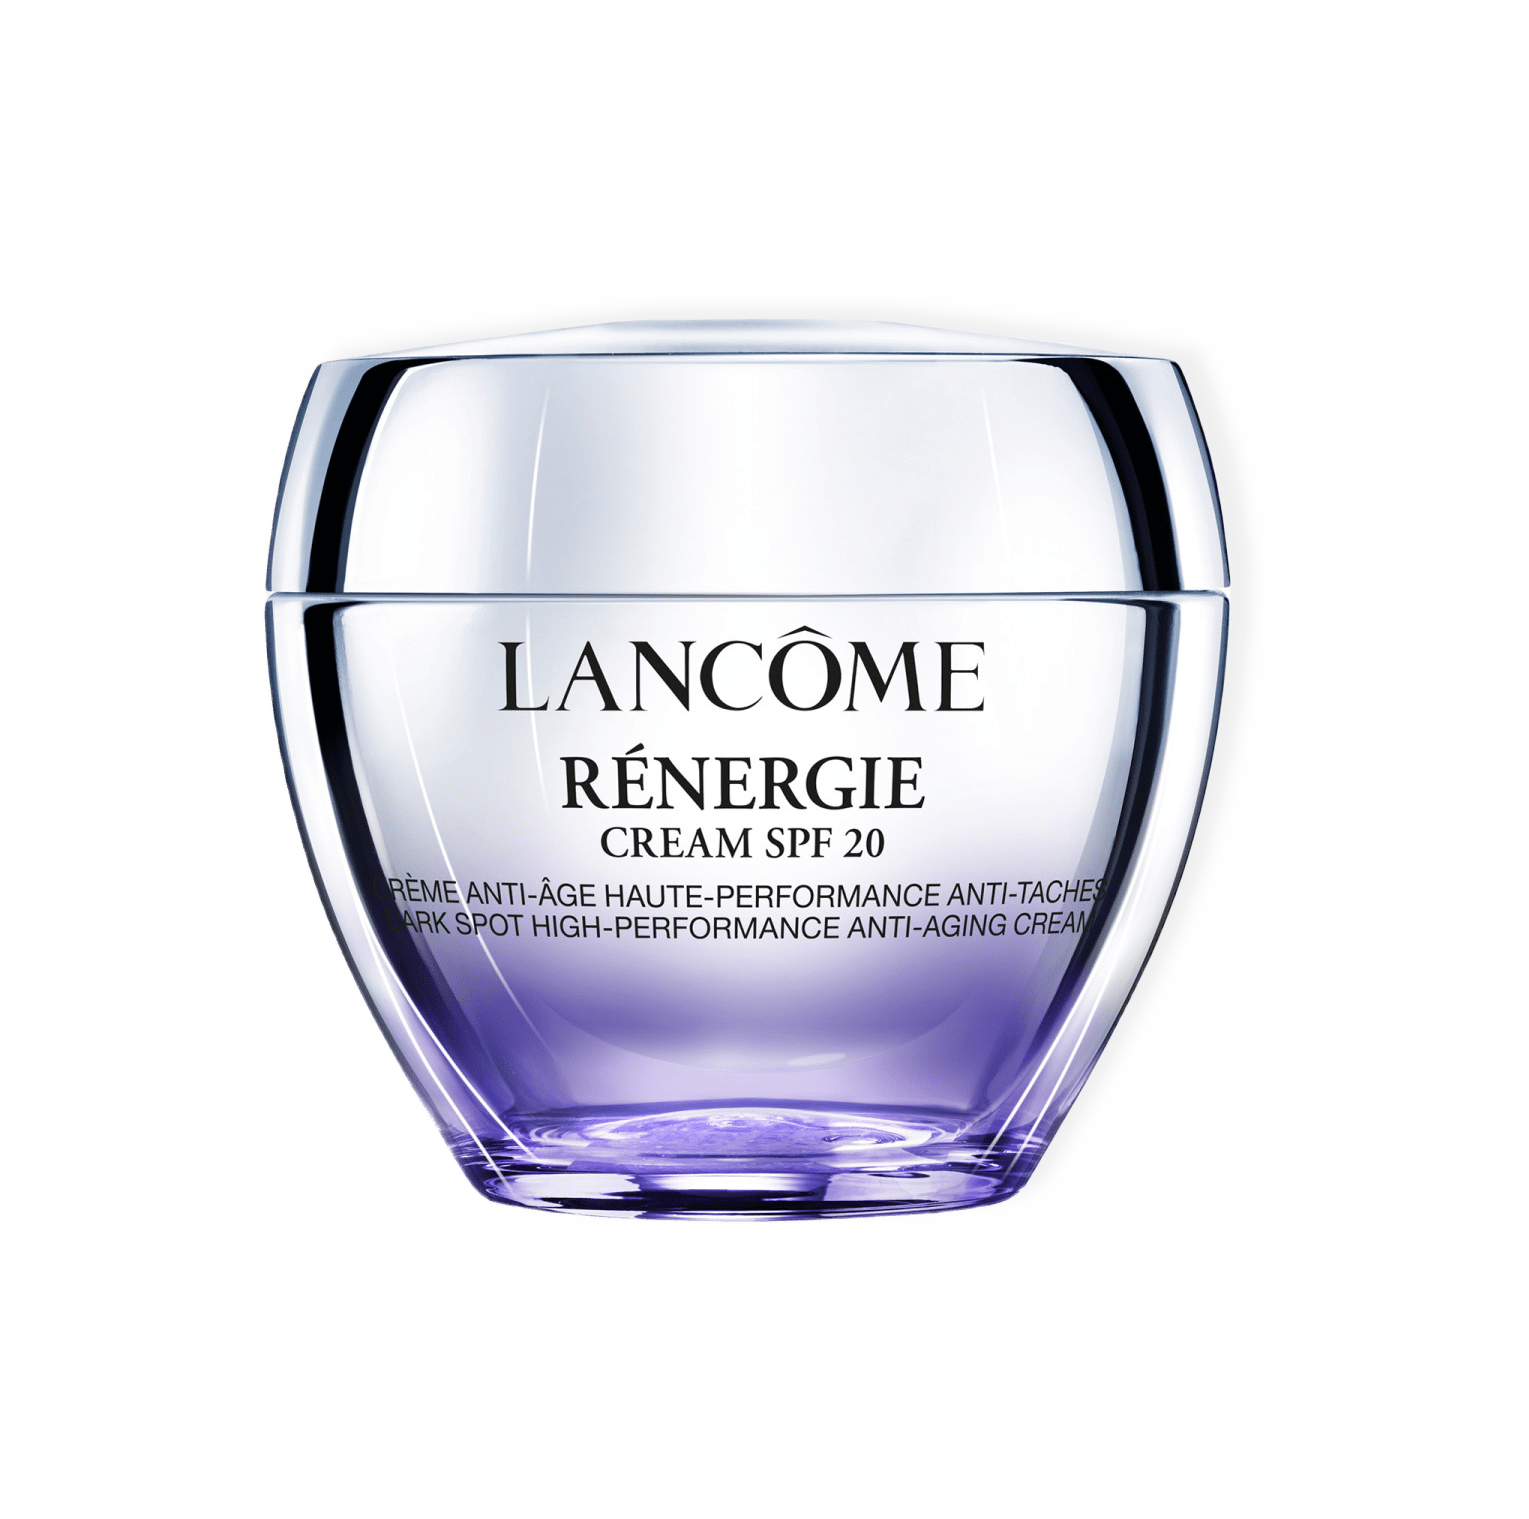 Rénergie Cream SPF20 från Lancôme